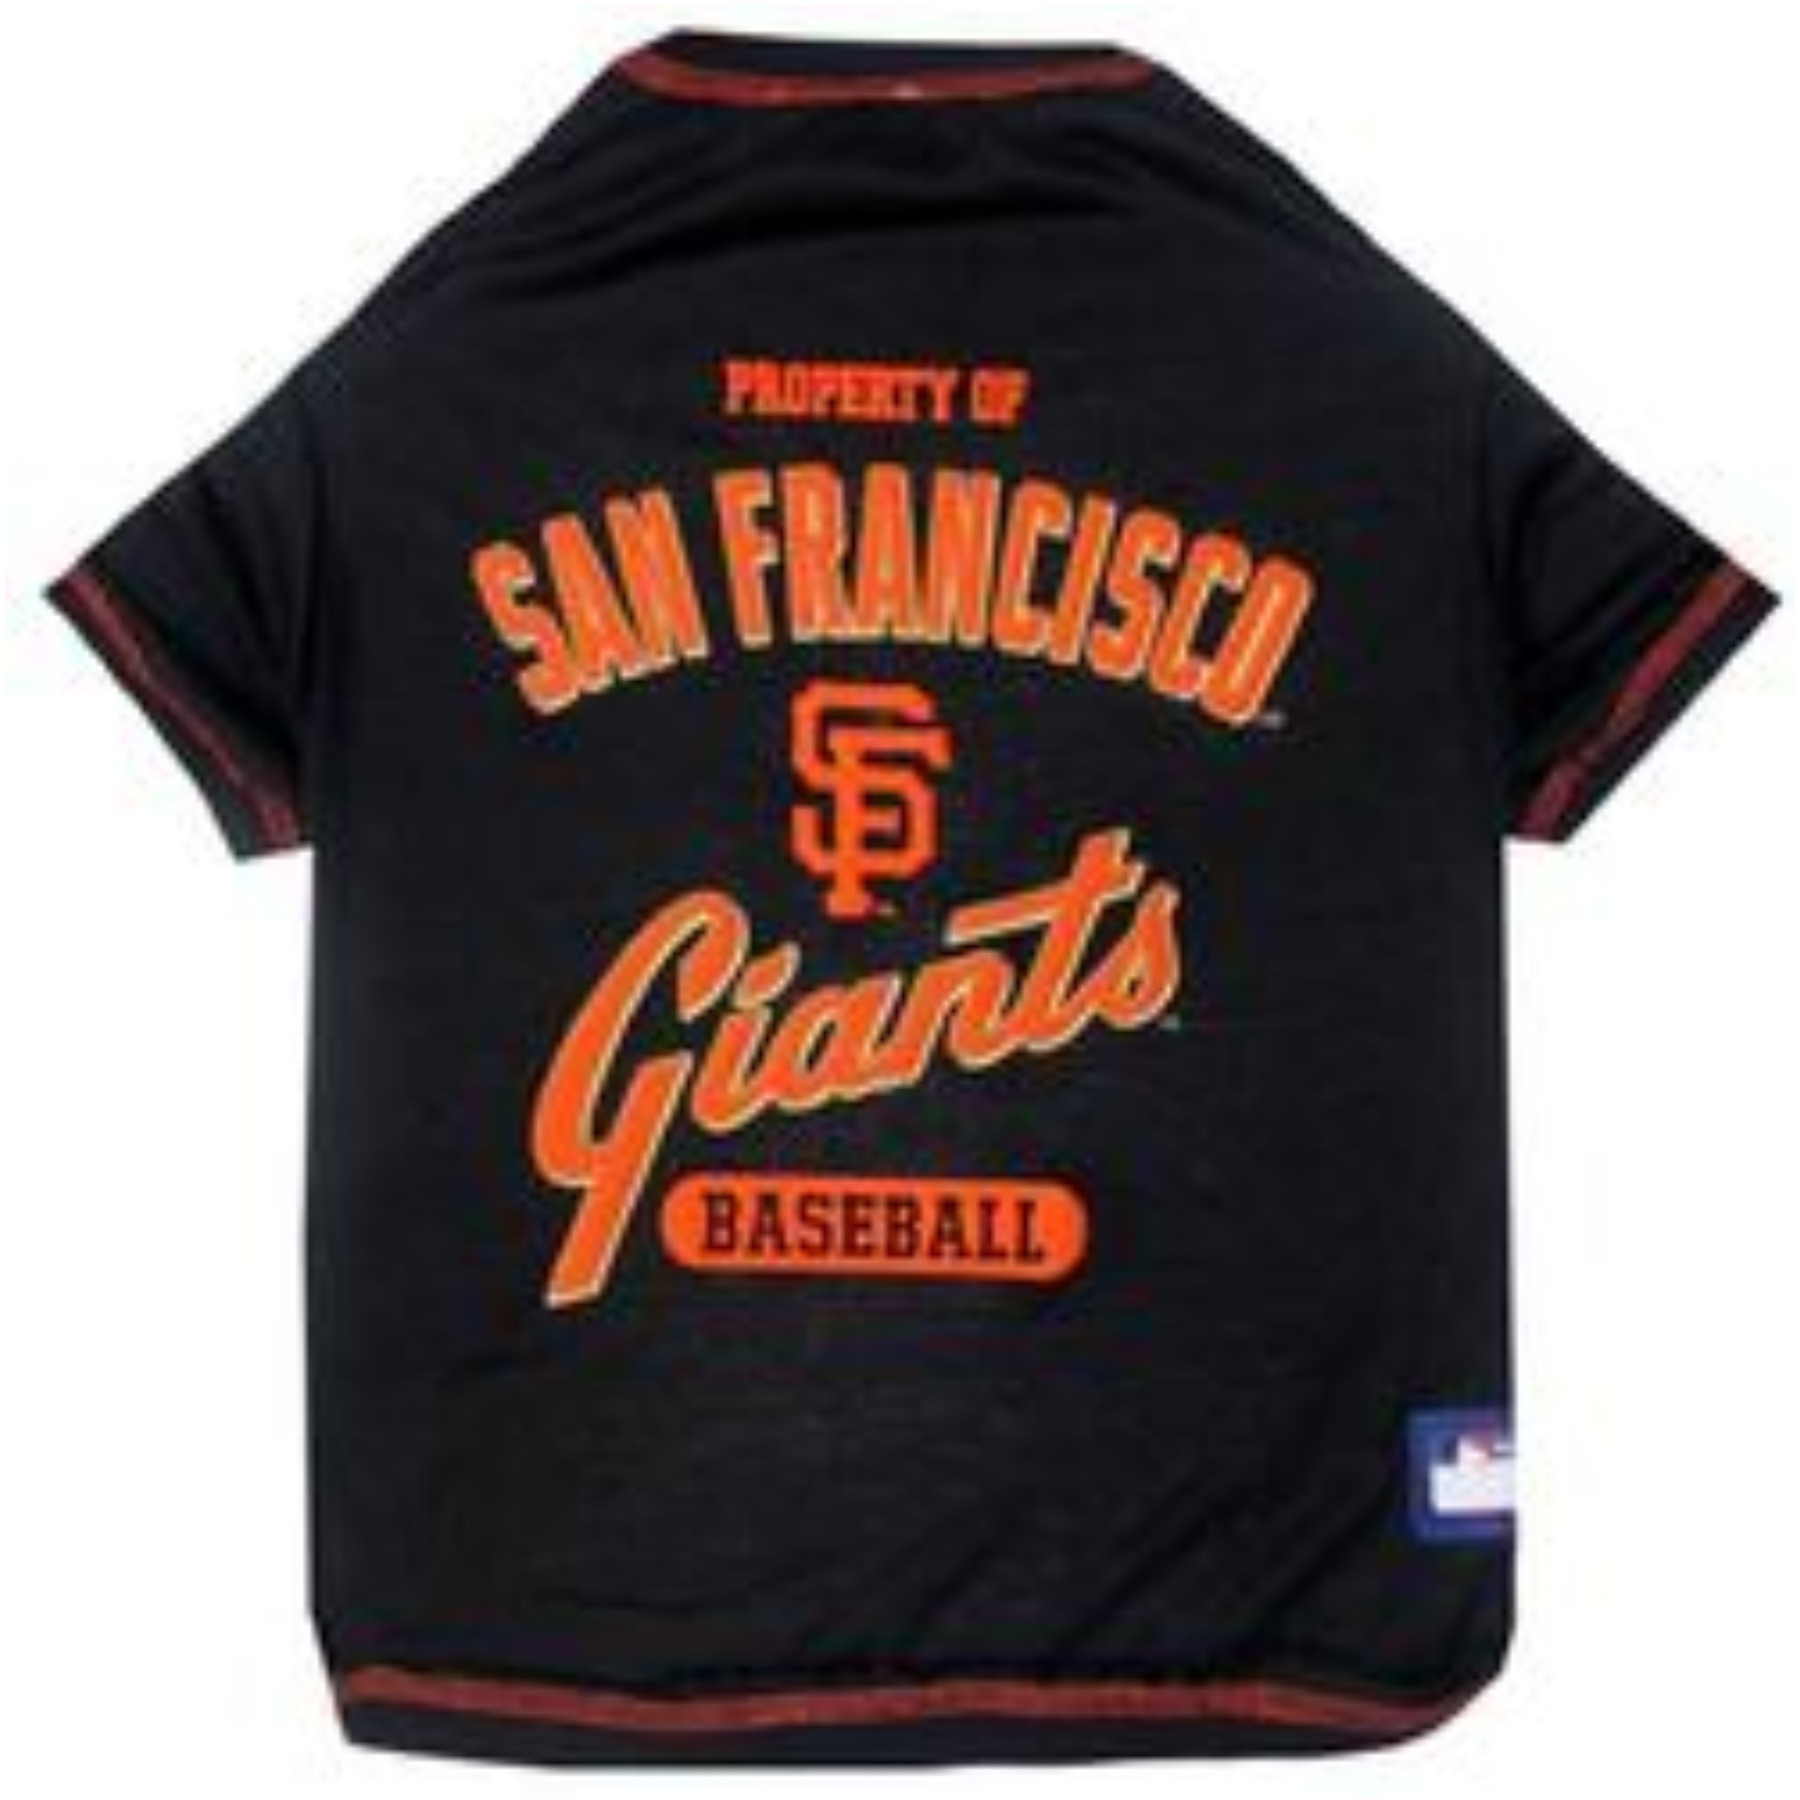 San Francisco Giants Dog Tee Shirt